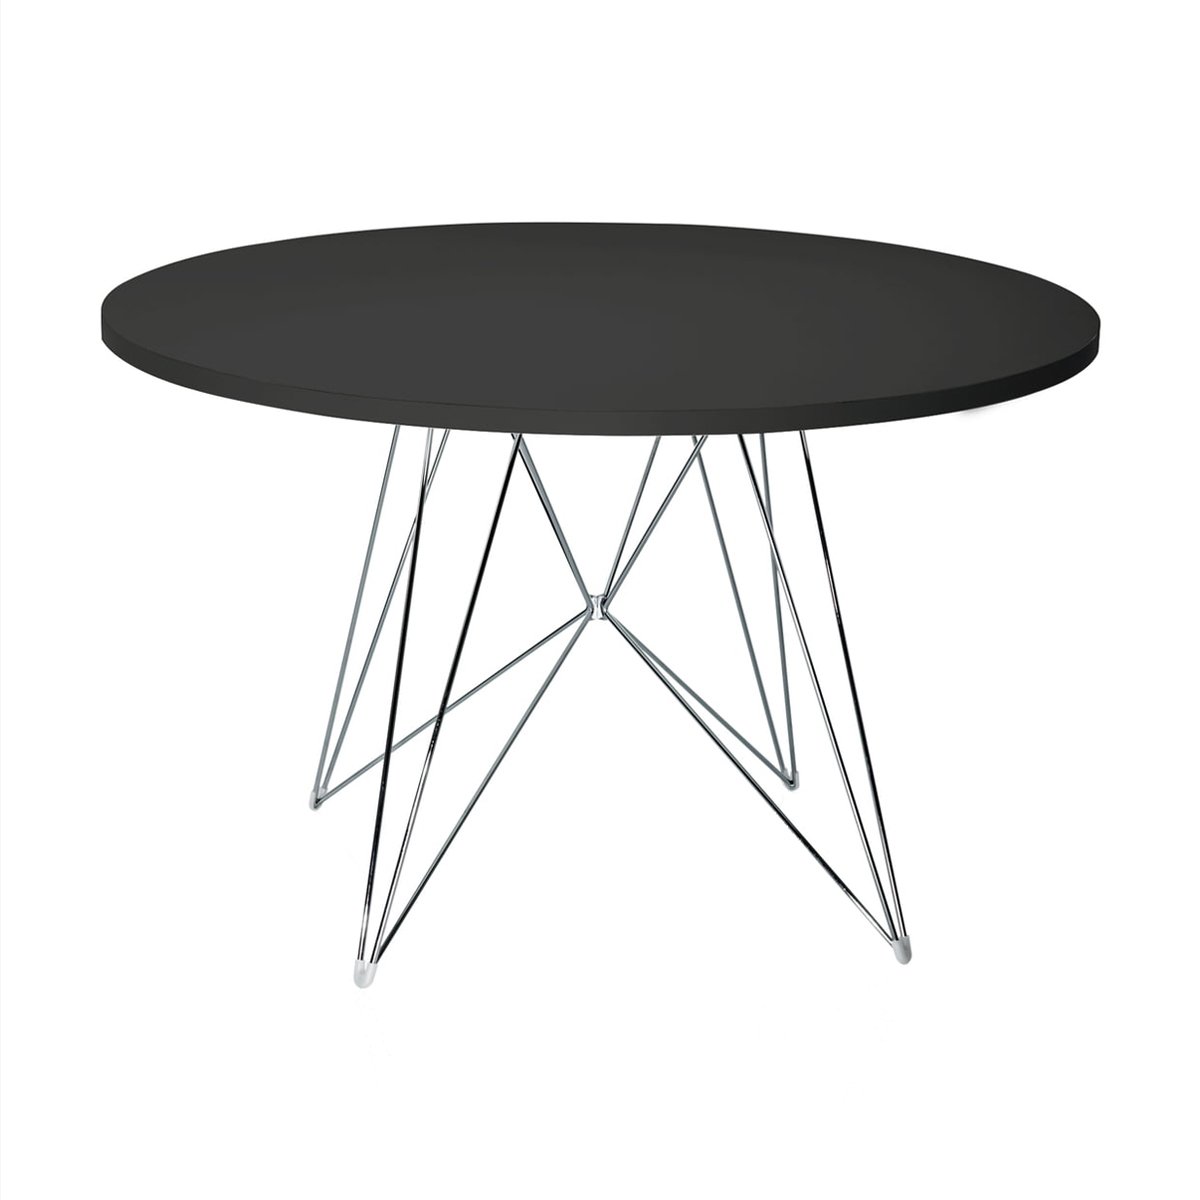 MAGIS  마지스 XZ3 table Black 테이블 원형 블랙 [예약판매: 주문일로부터 발송까지 3개월 대기 예상]